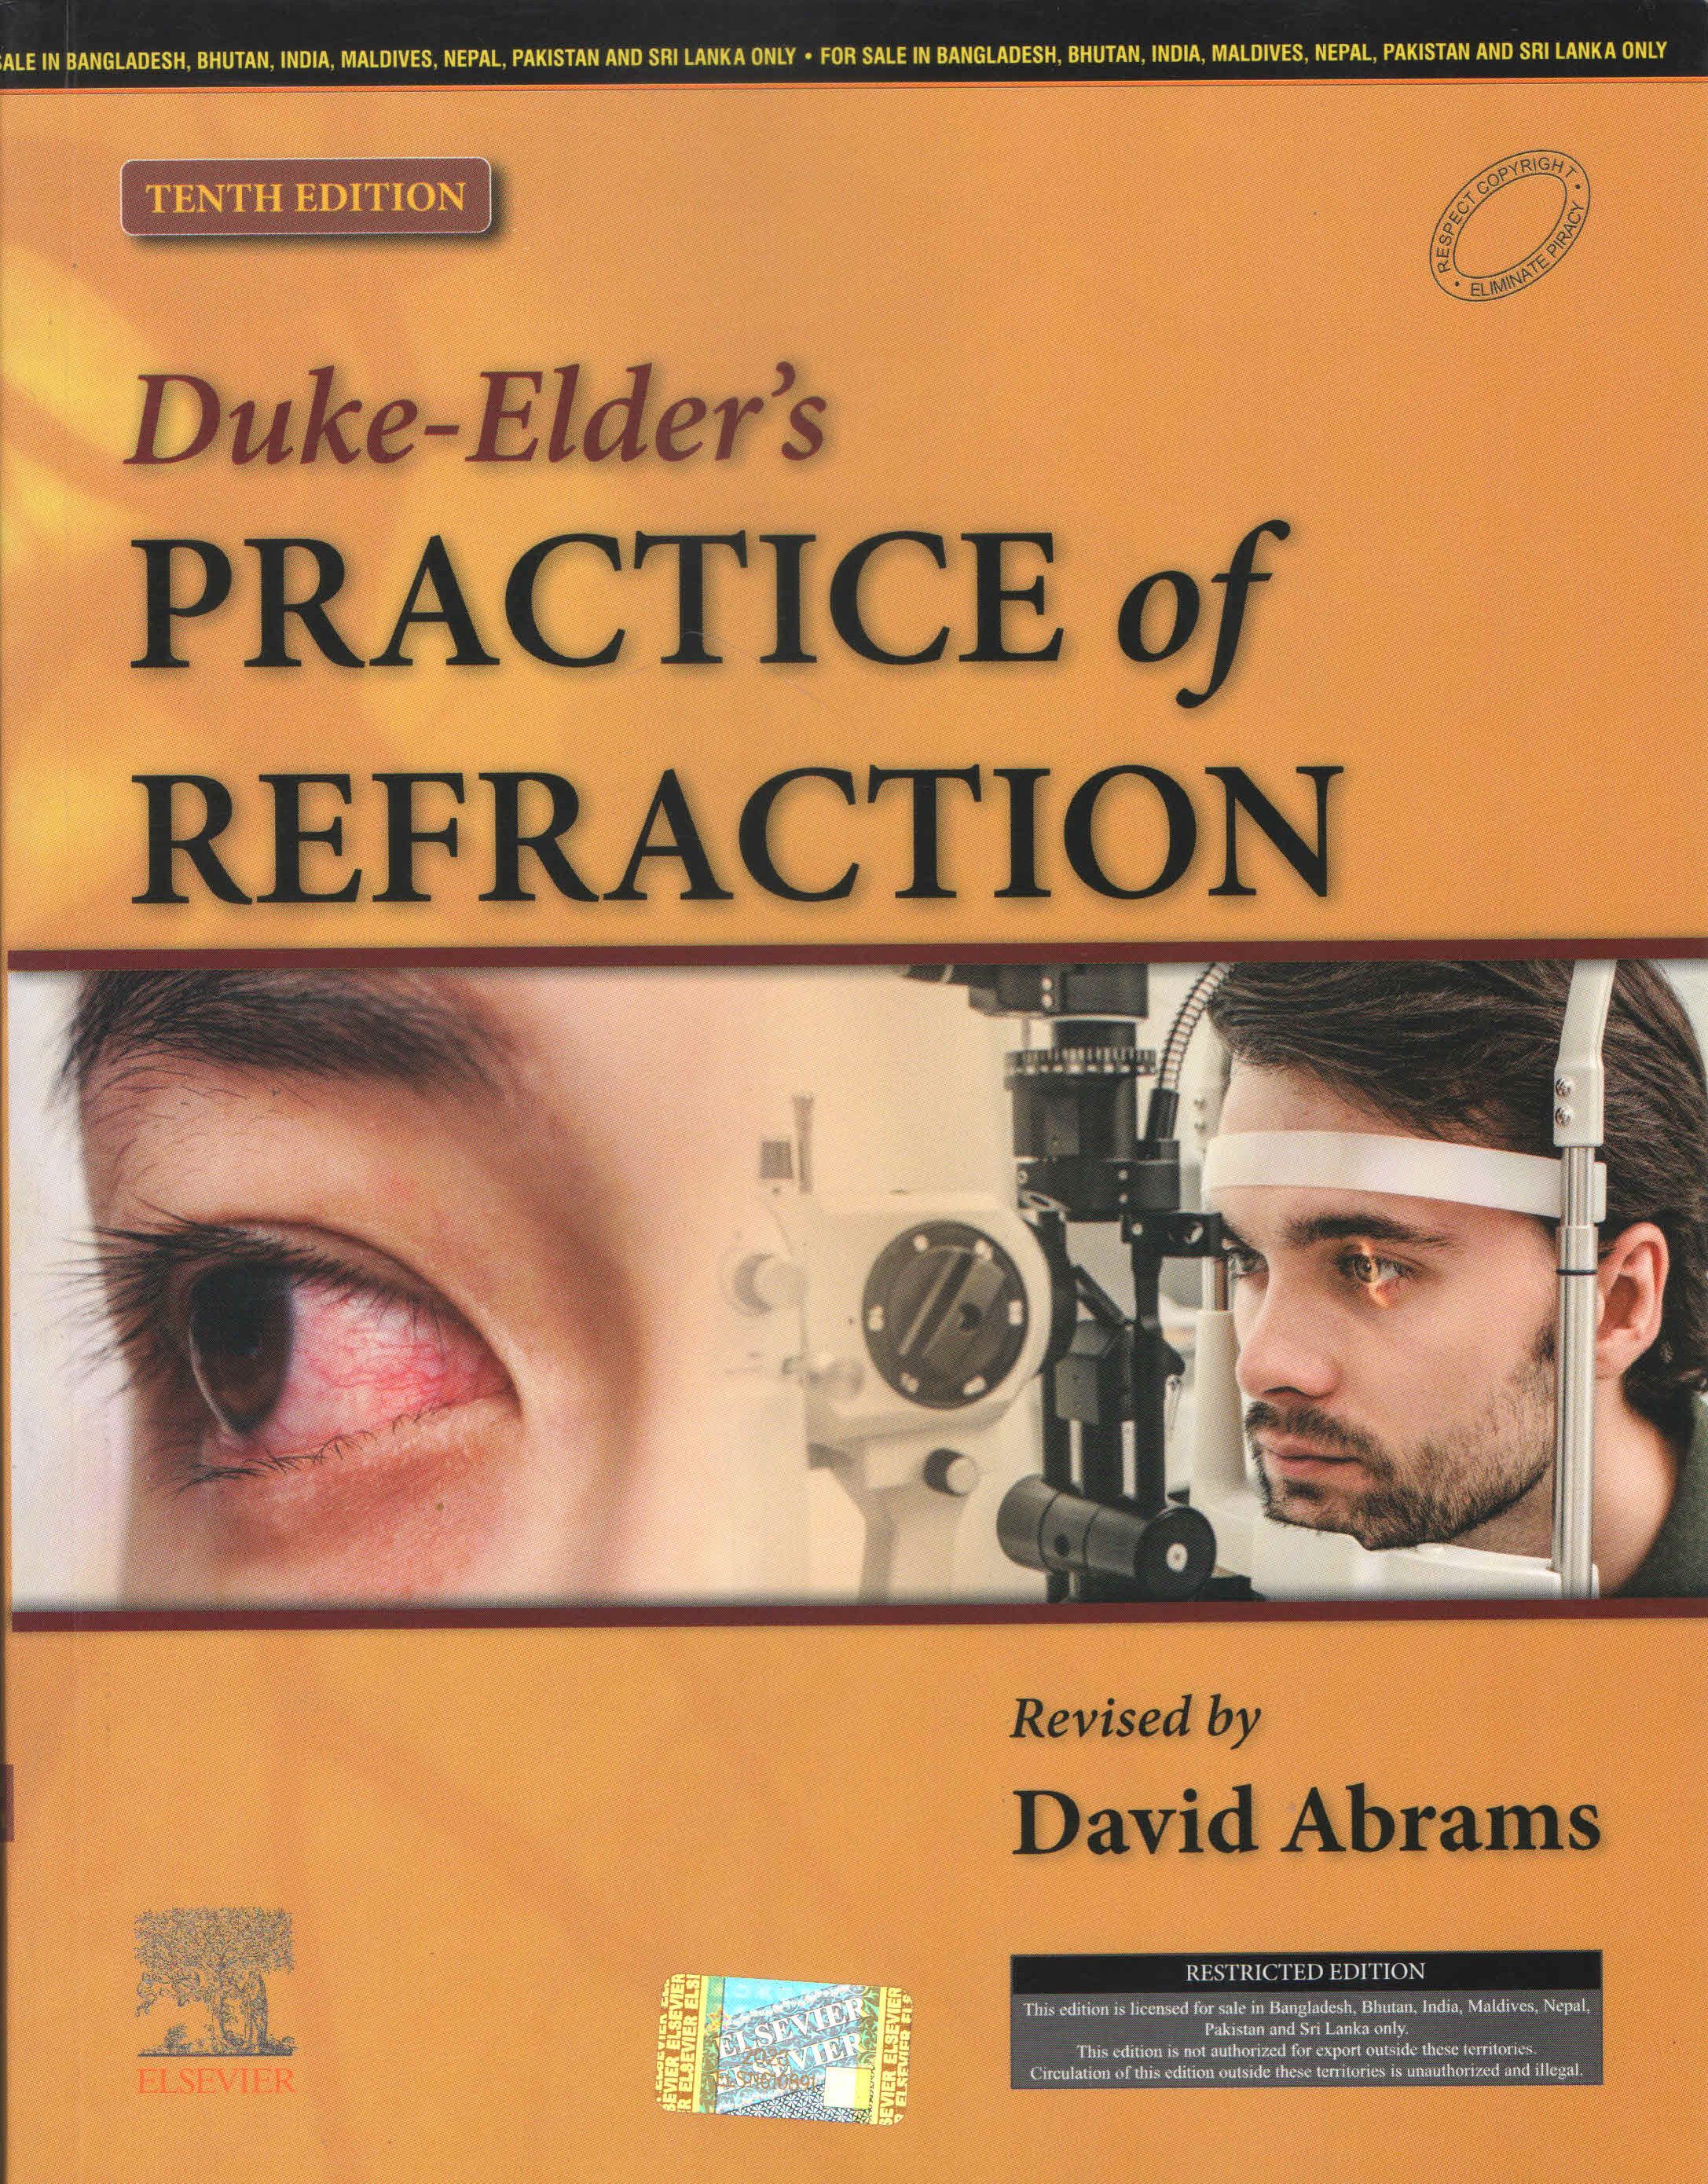 

exclusive-publishers/elsevier/duke-elder-s-practice-of-refraction-9788131233337